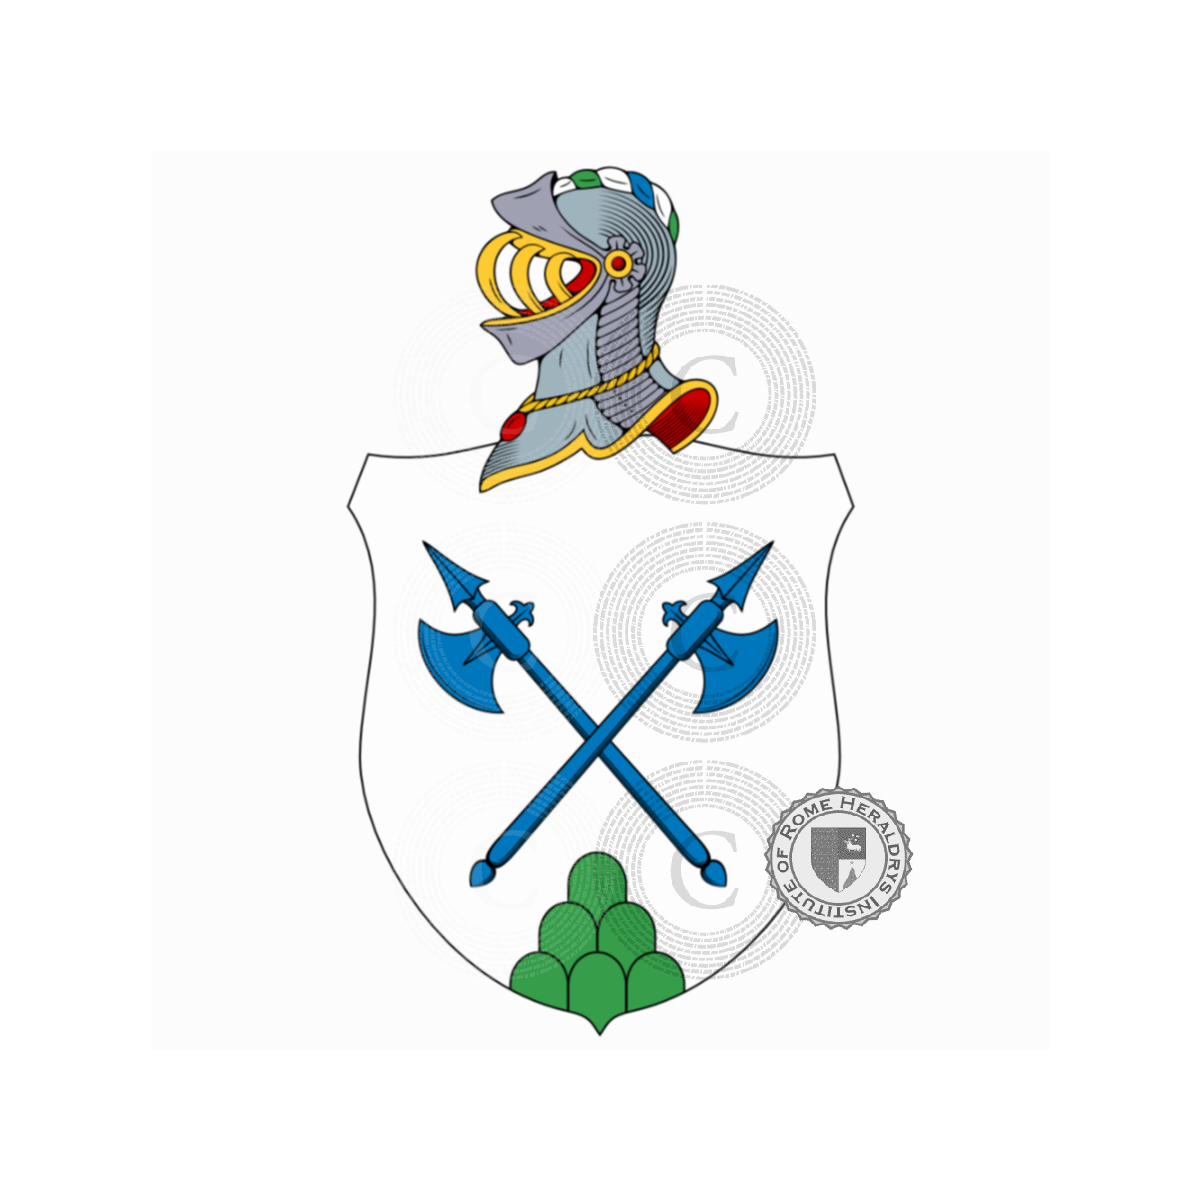 Wappen der FamiliePellegrini, de Pellegrini,Pellegrinelli,Pellegrinello,Pellegrini Trieste